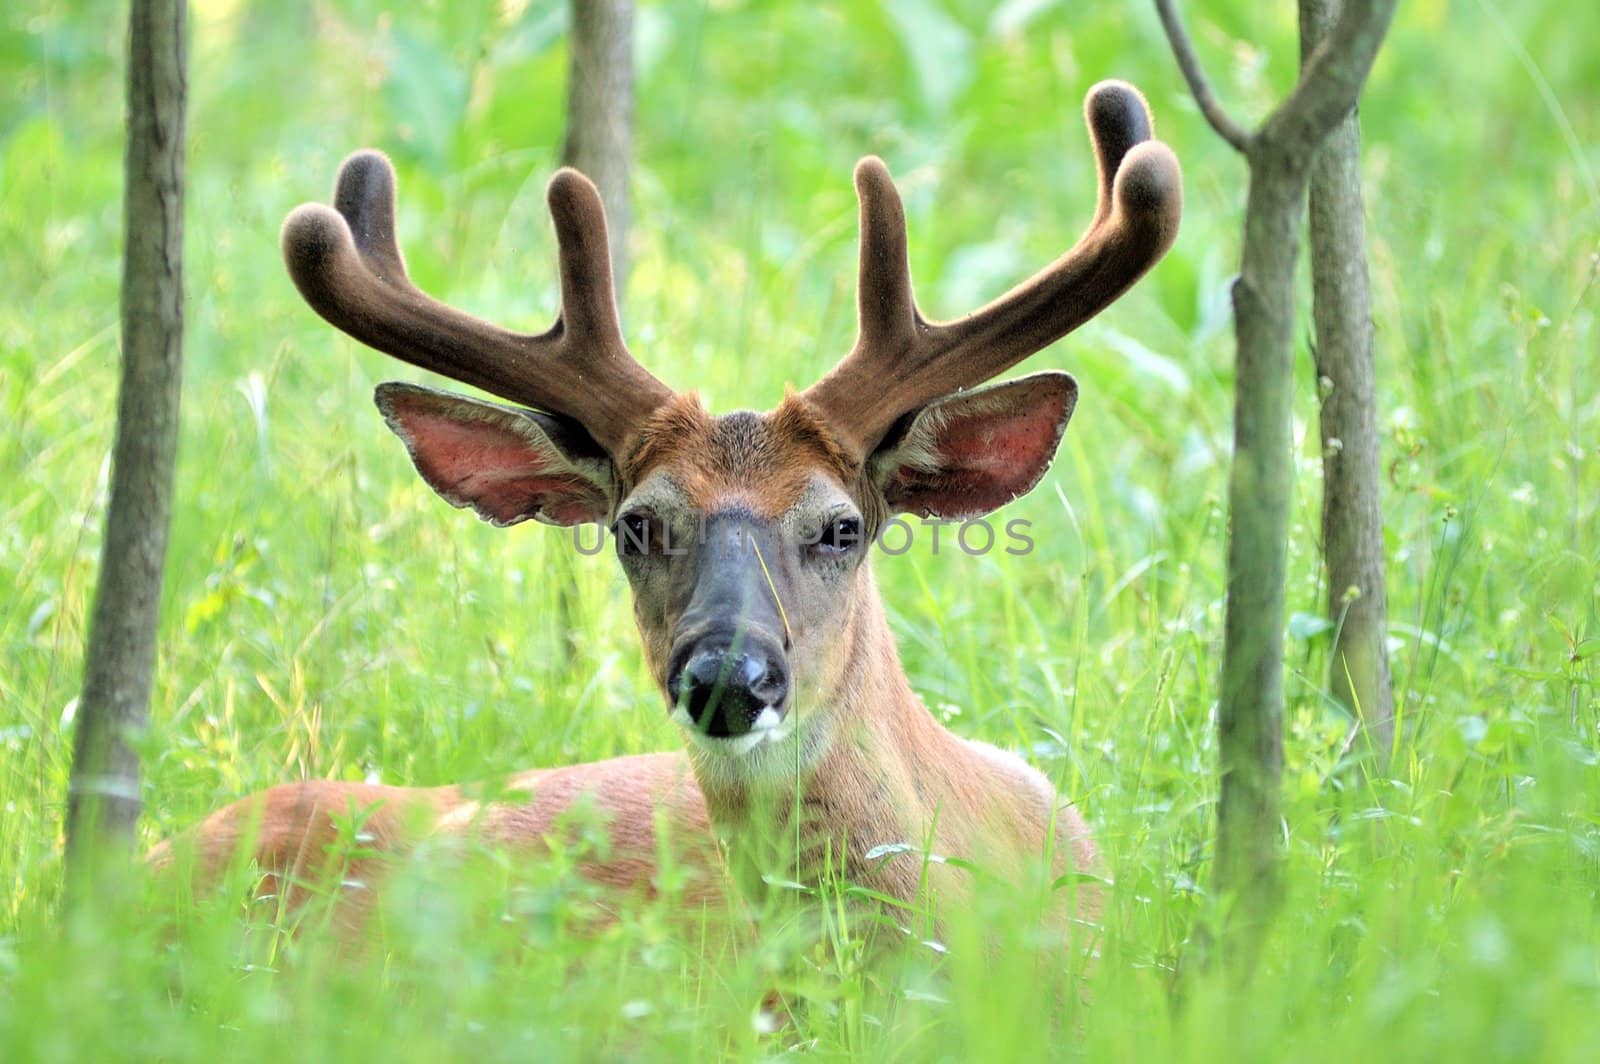 A whitetail deer buck in summer velvet bedded down in a field.